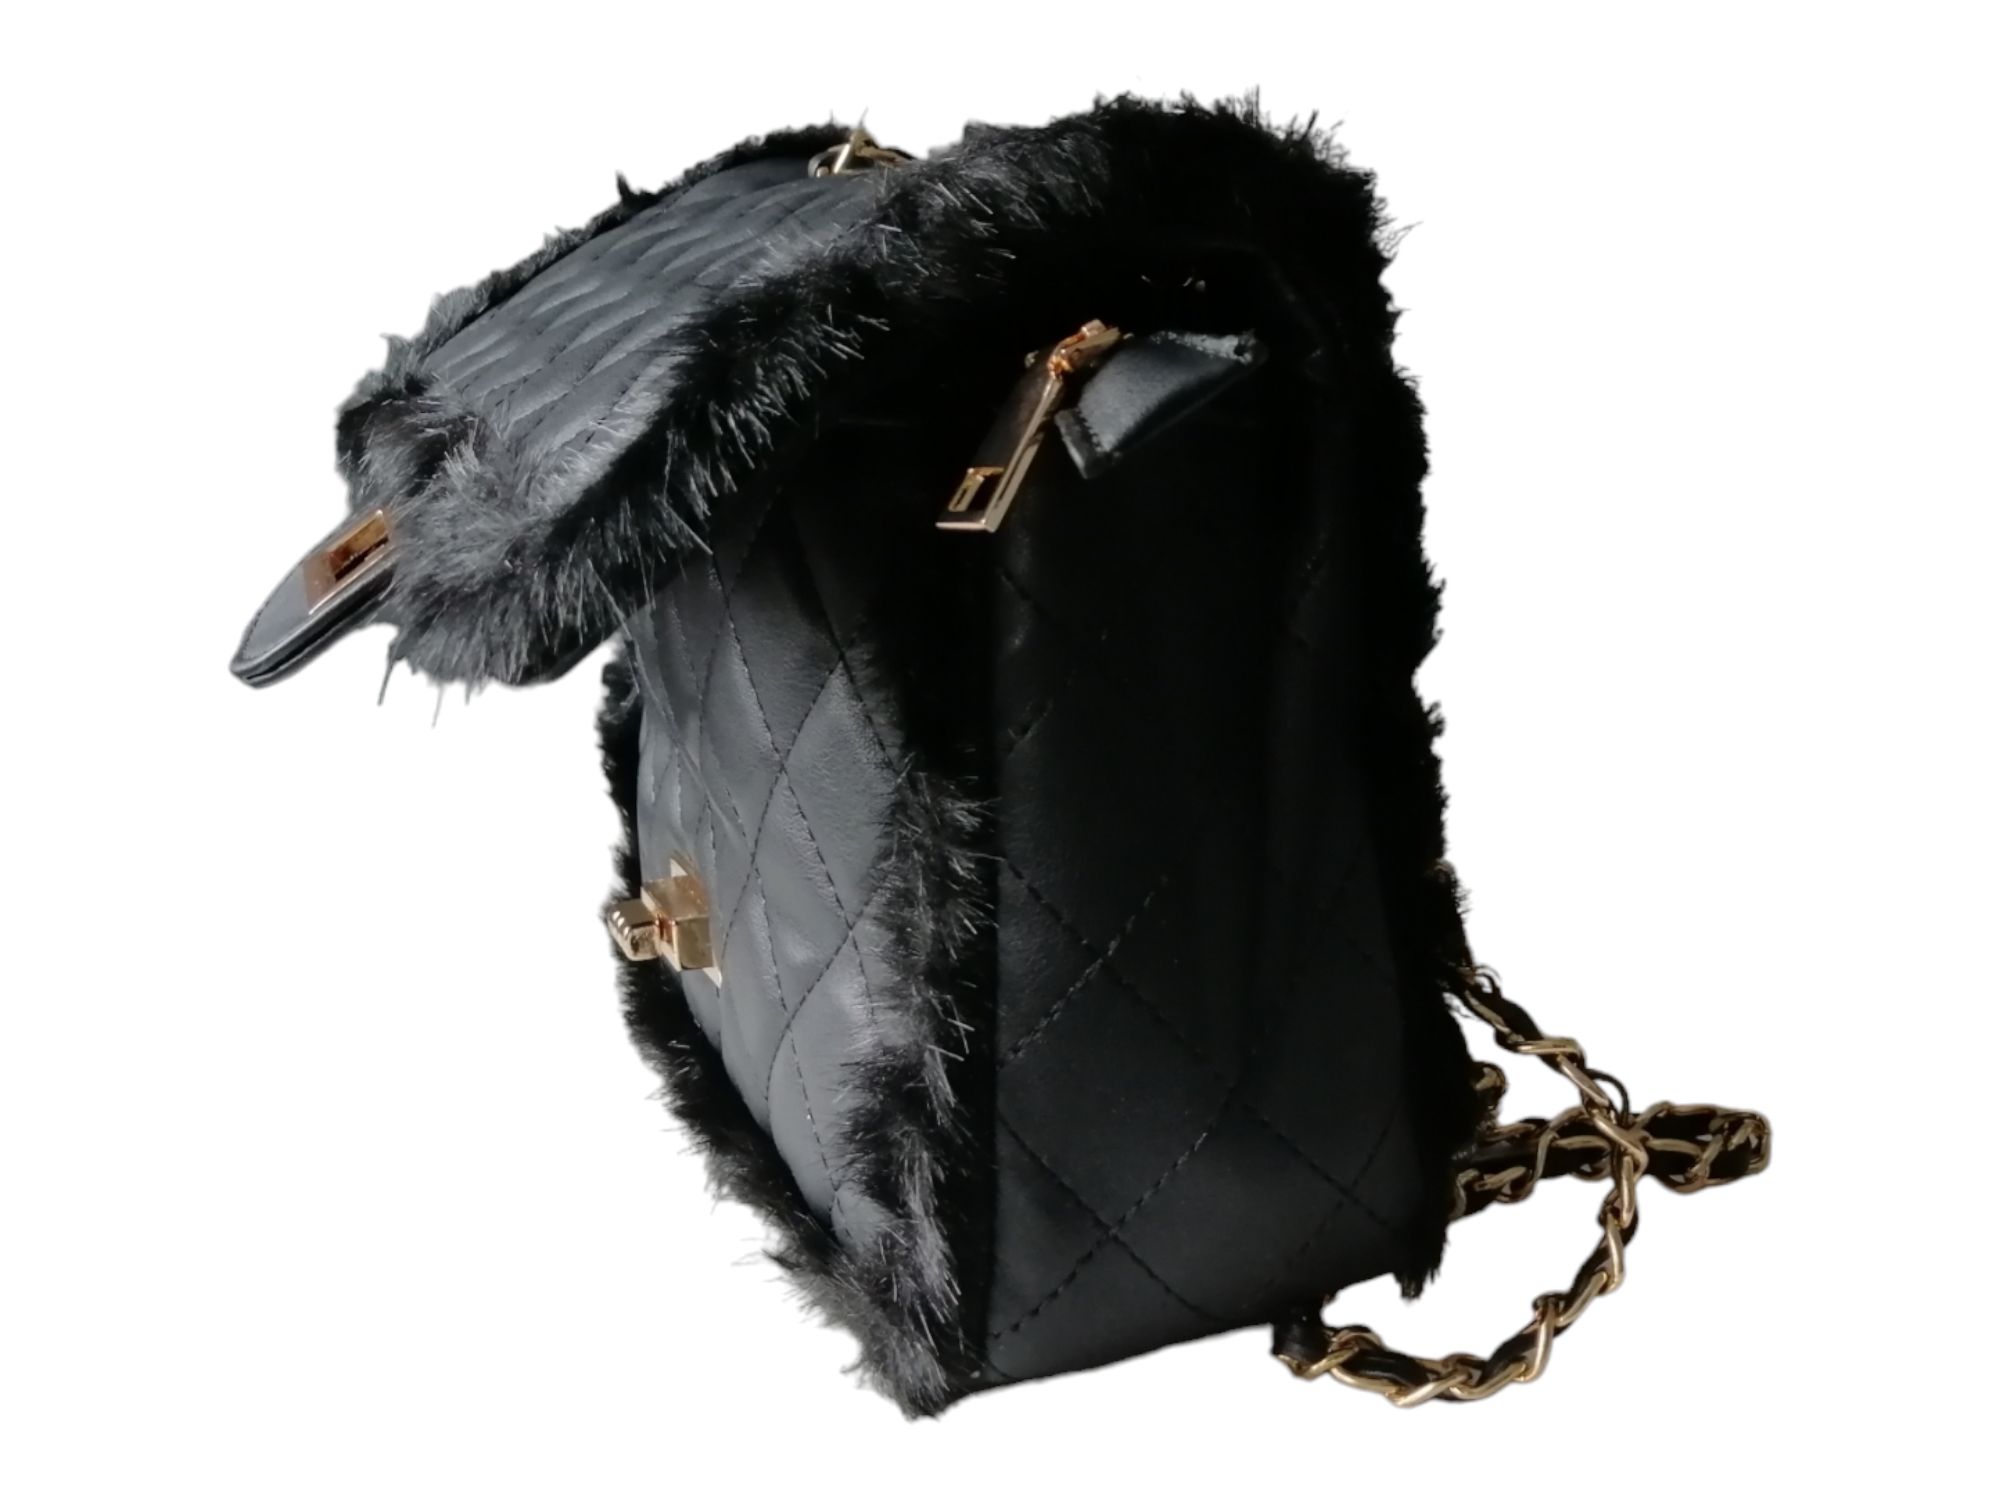 klasyczna listonoszka damska torebka na ramię, modna czarna torba